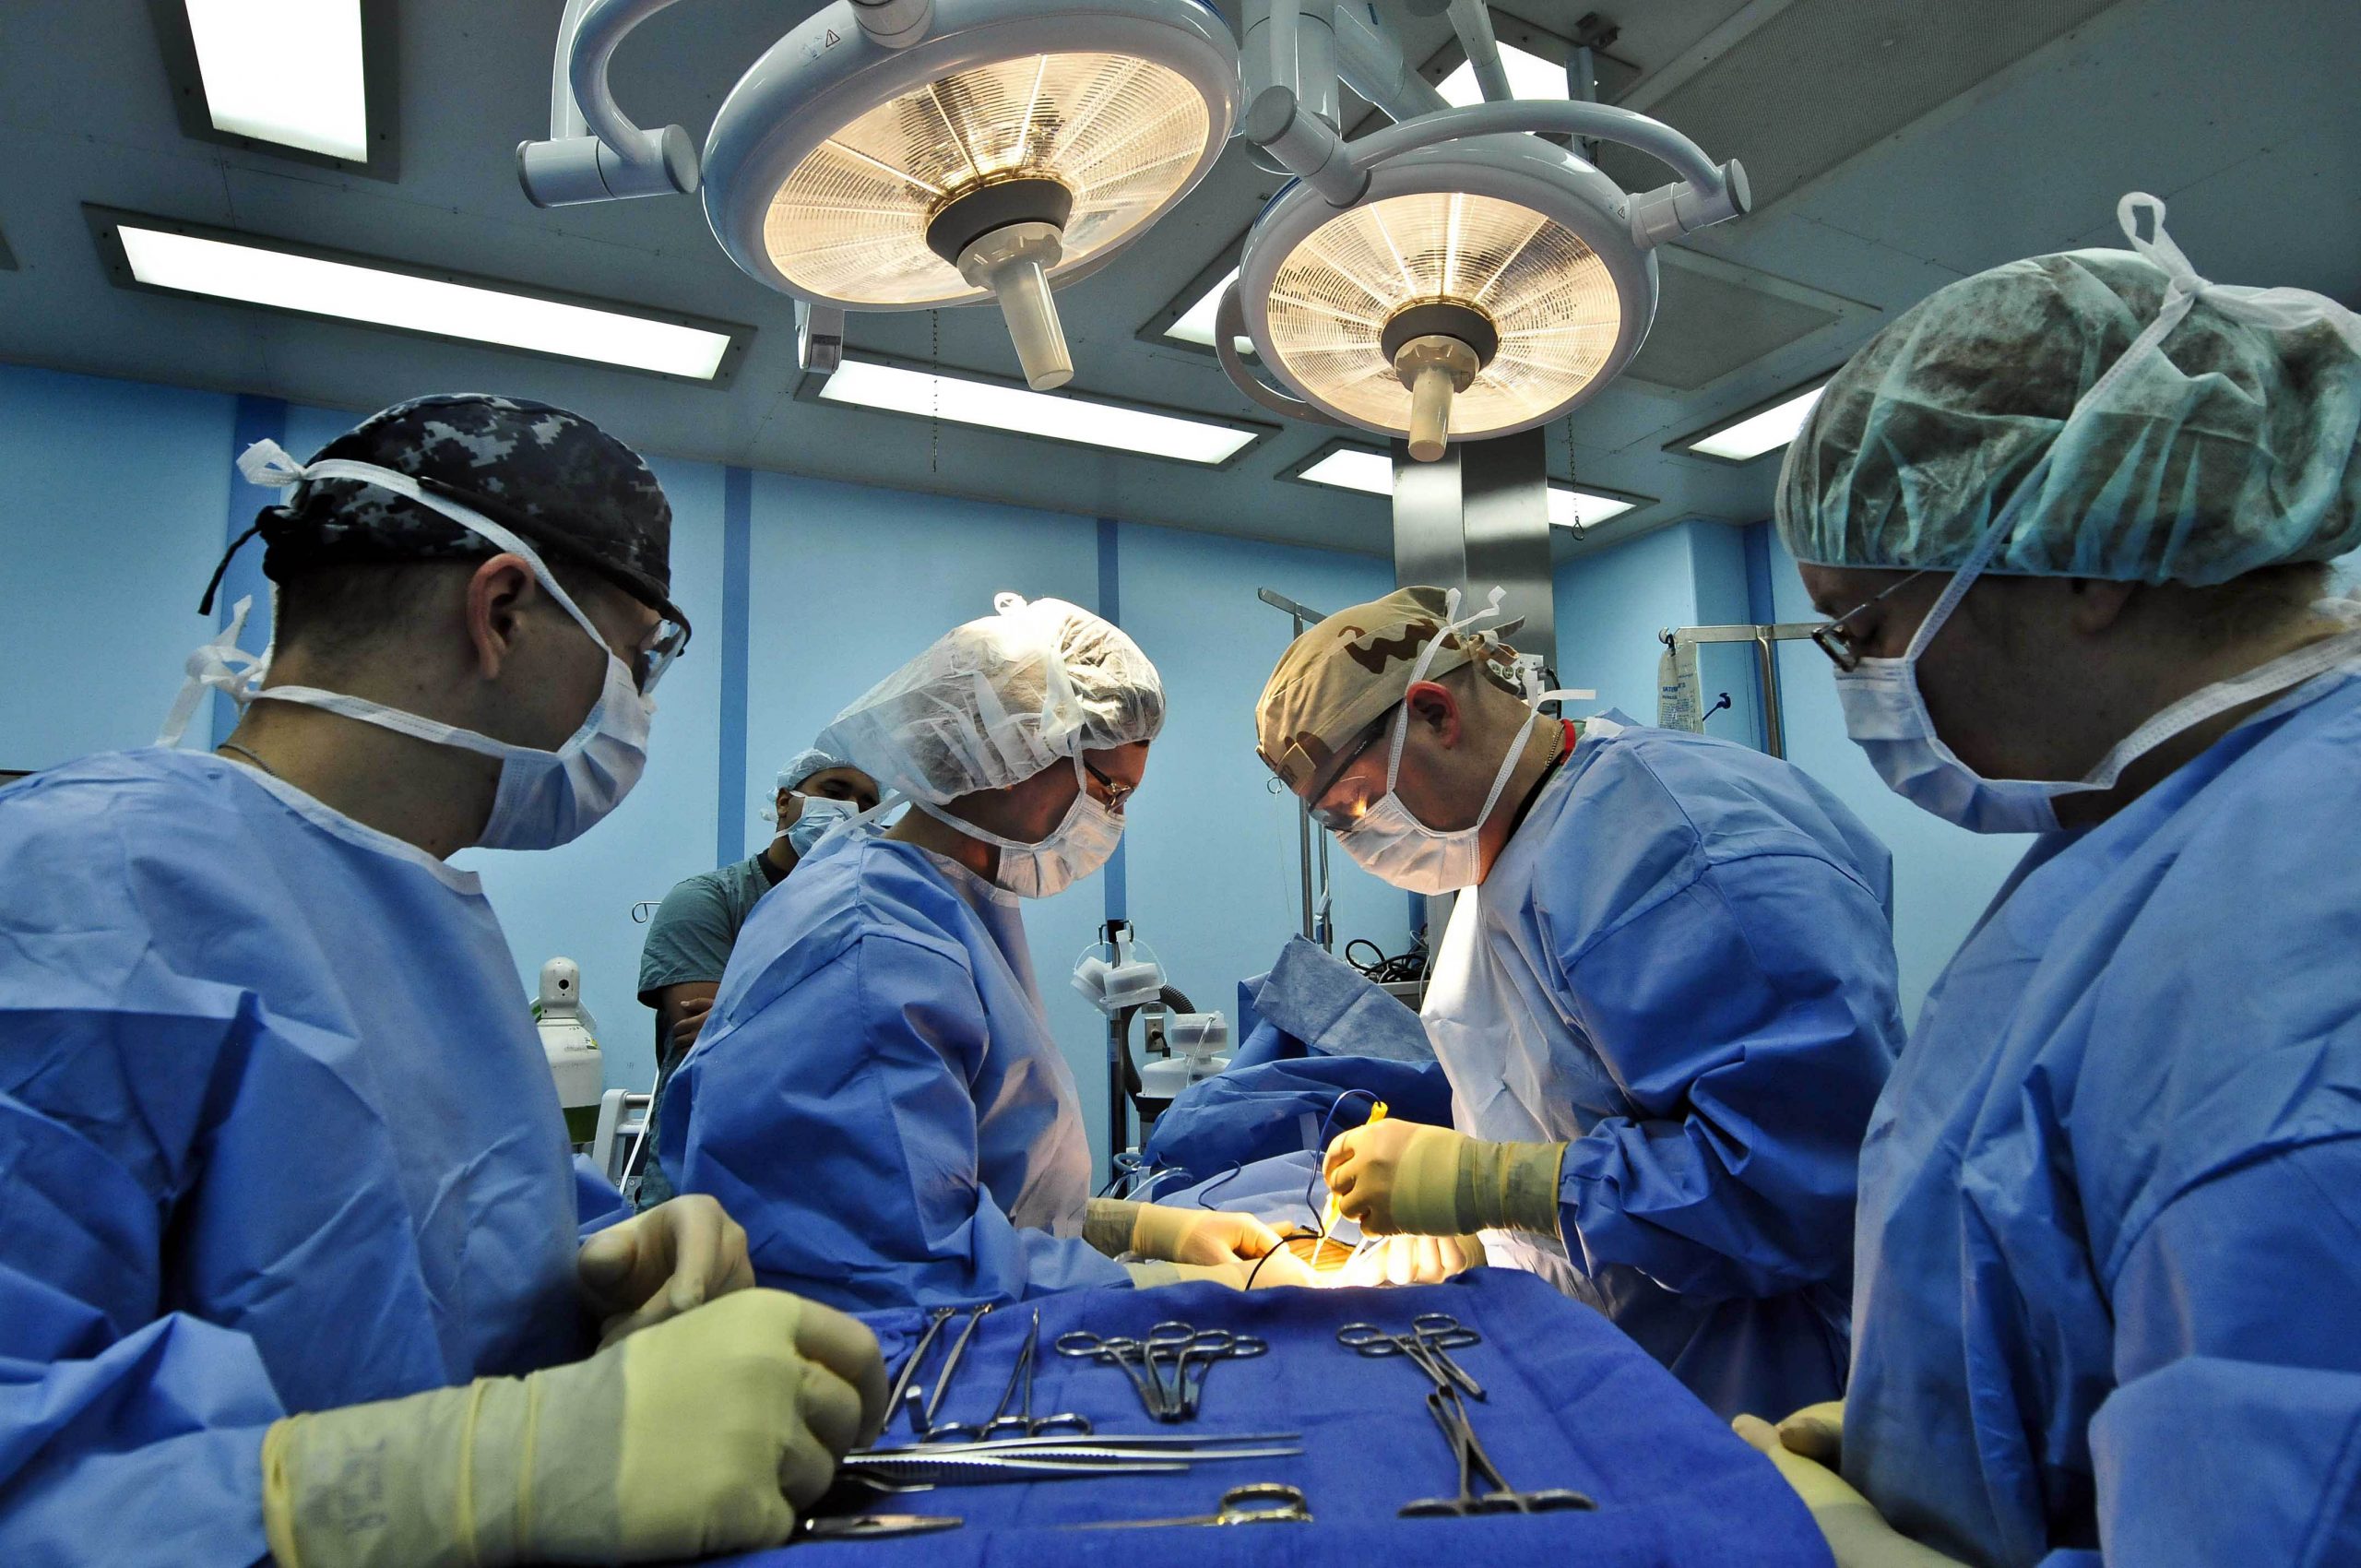 Doctors perform surgery medicine hospital